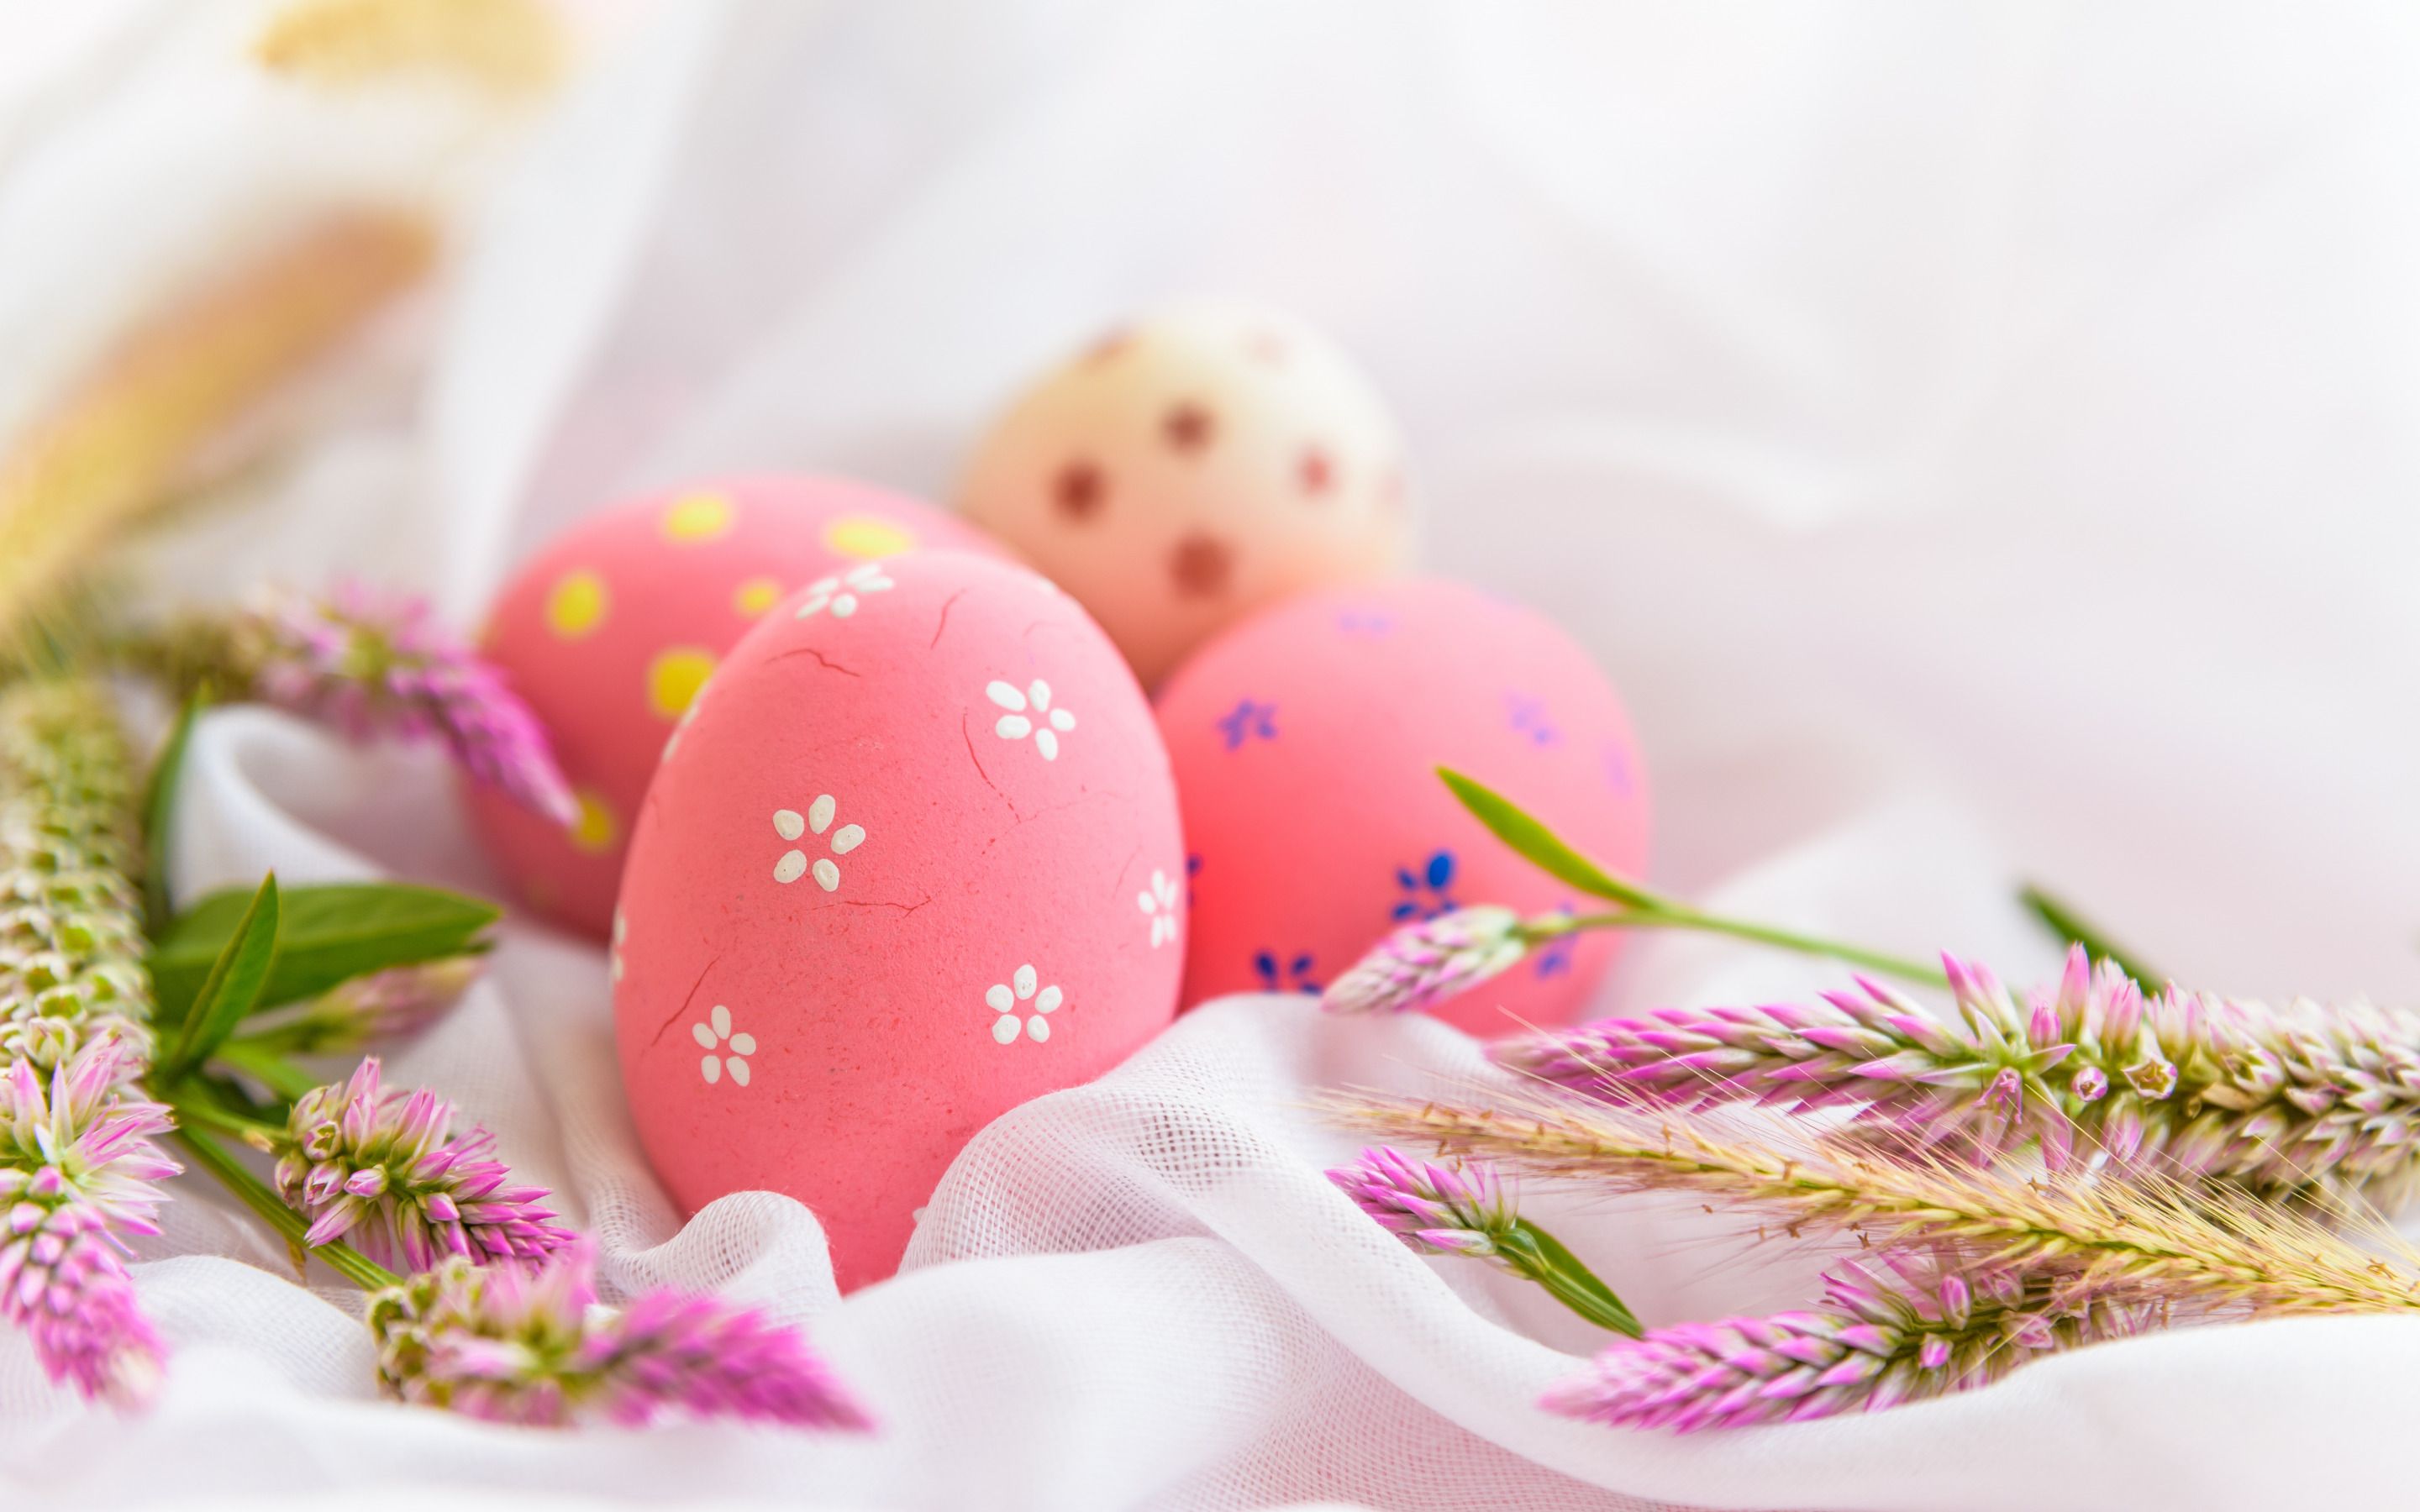 Download wallpaper Pink Easter eggs, spring purple flowers